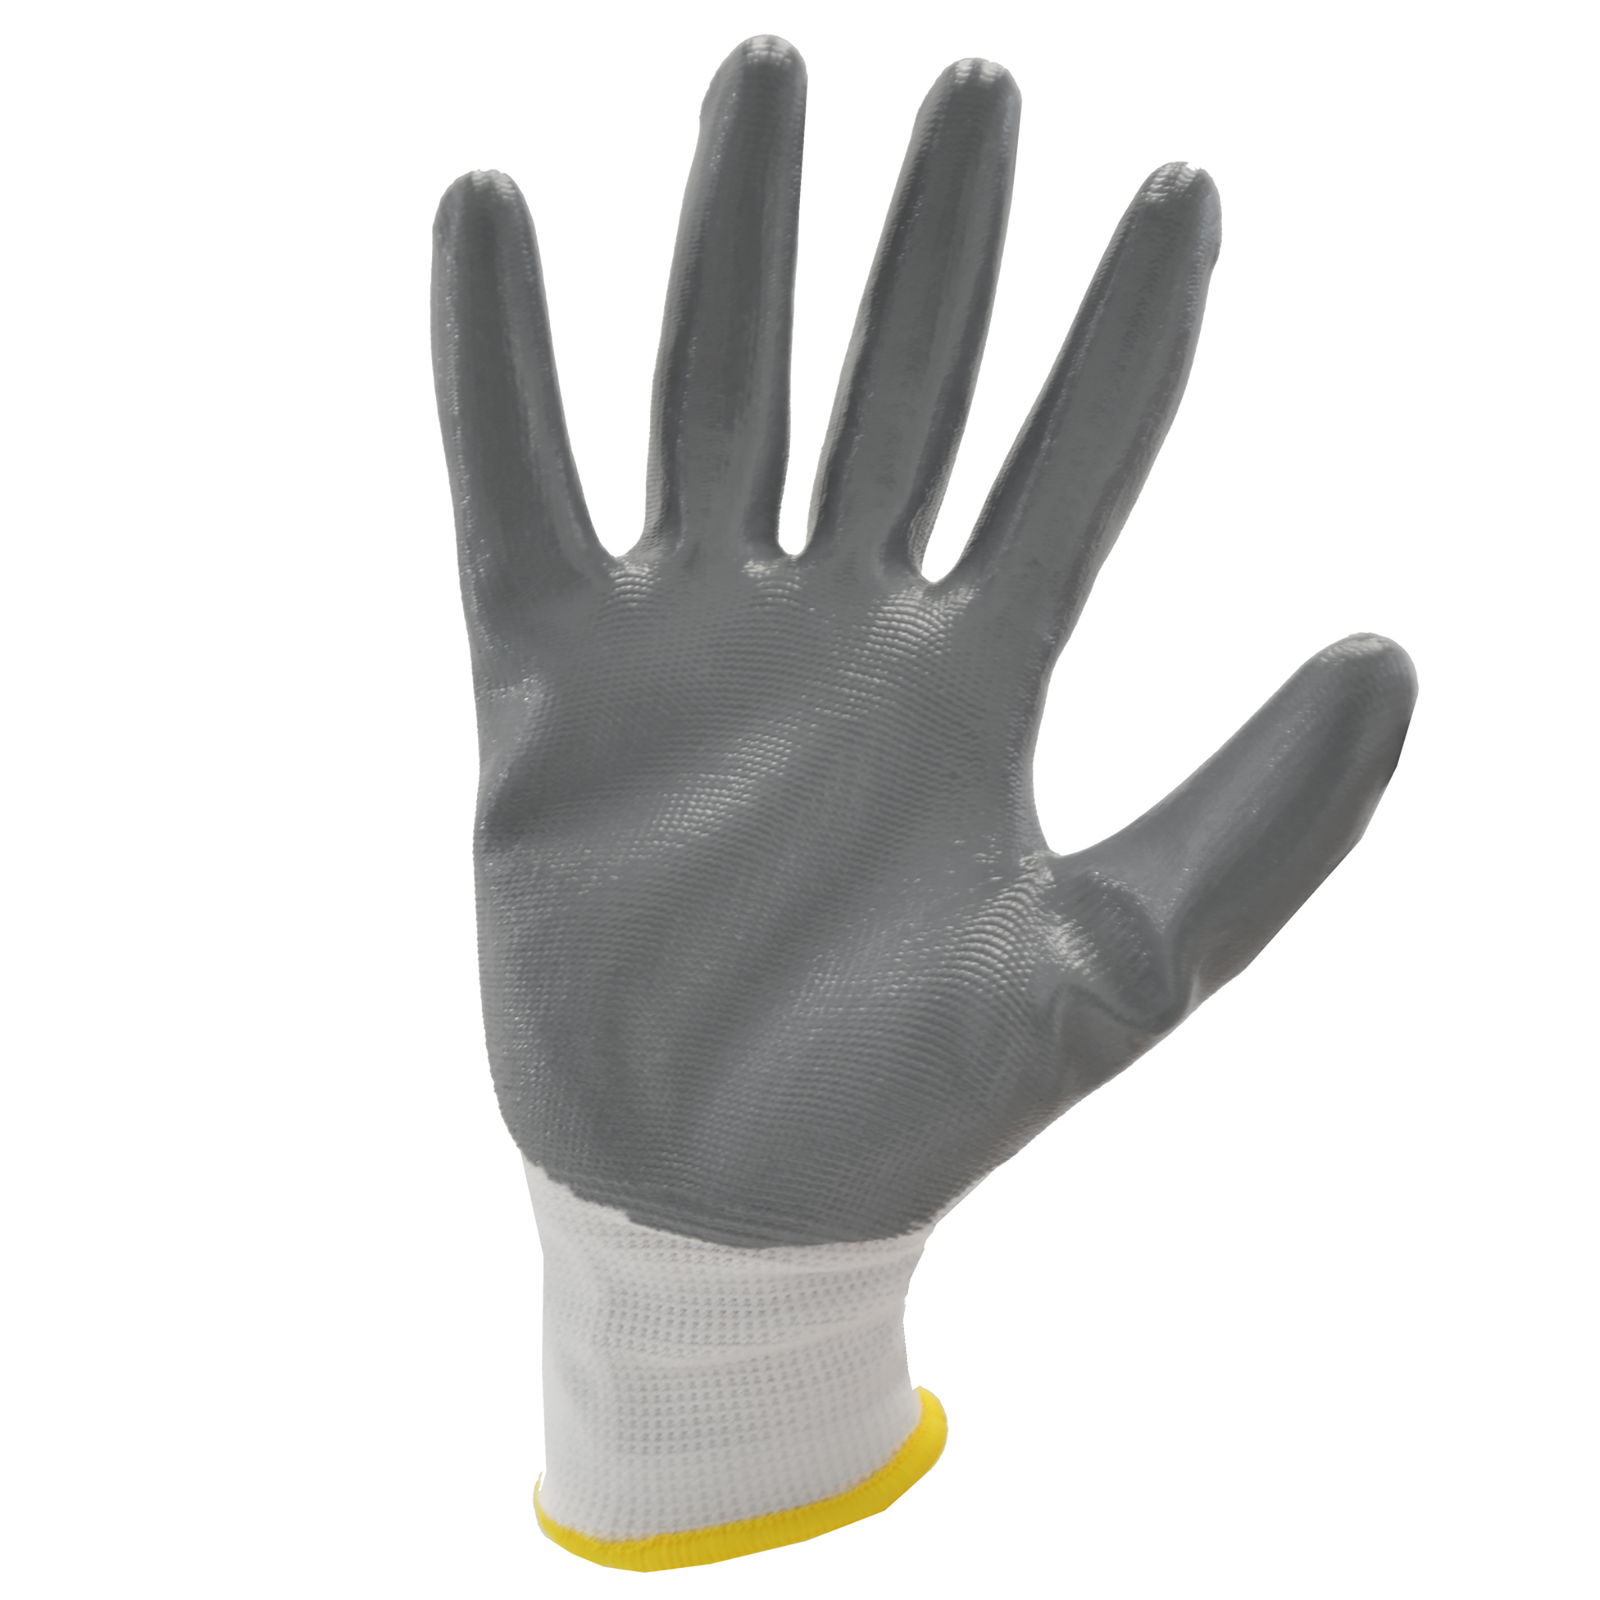 JORESTECH Work Gloves Multipurpose (Large, Green)